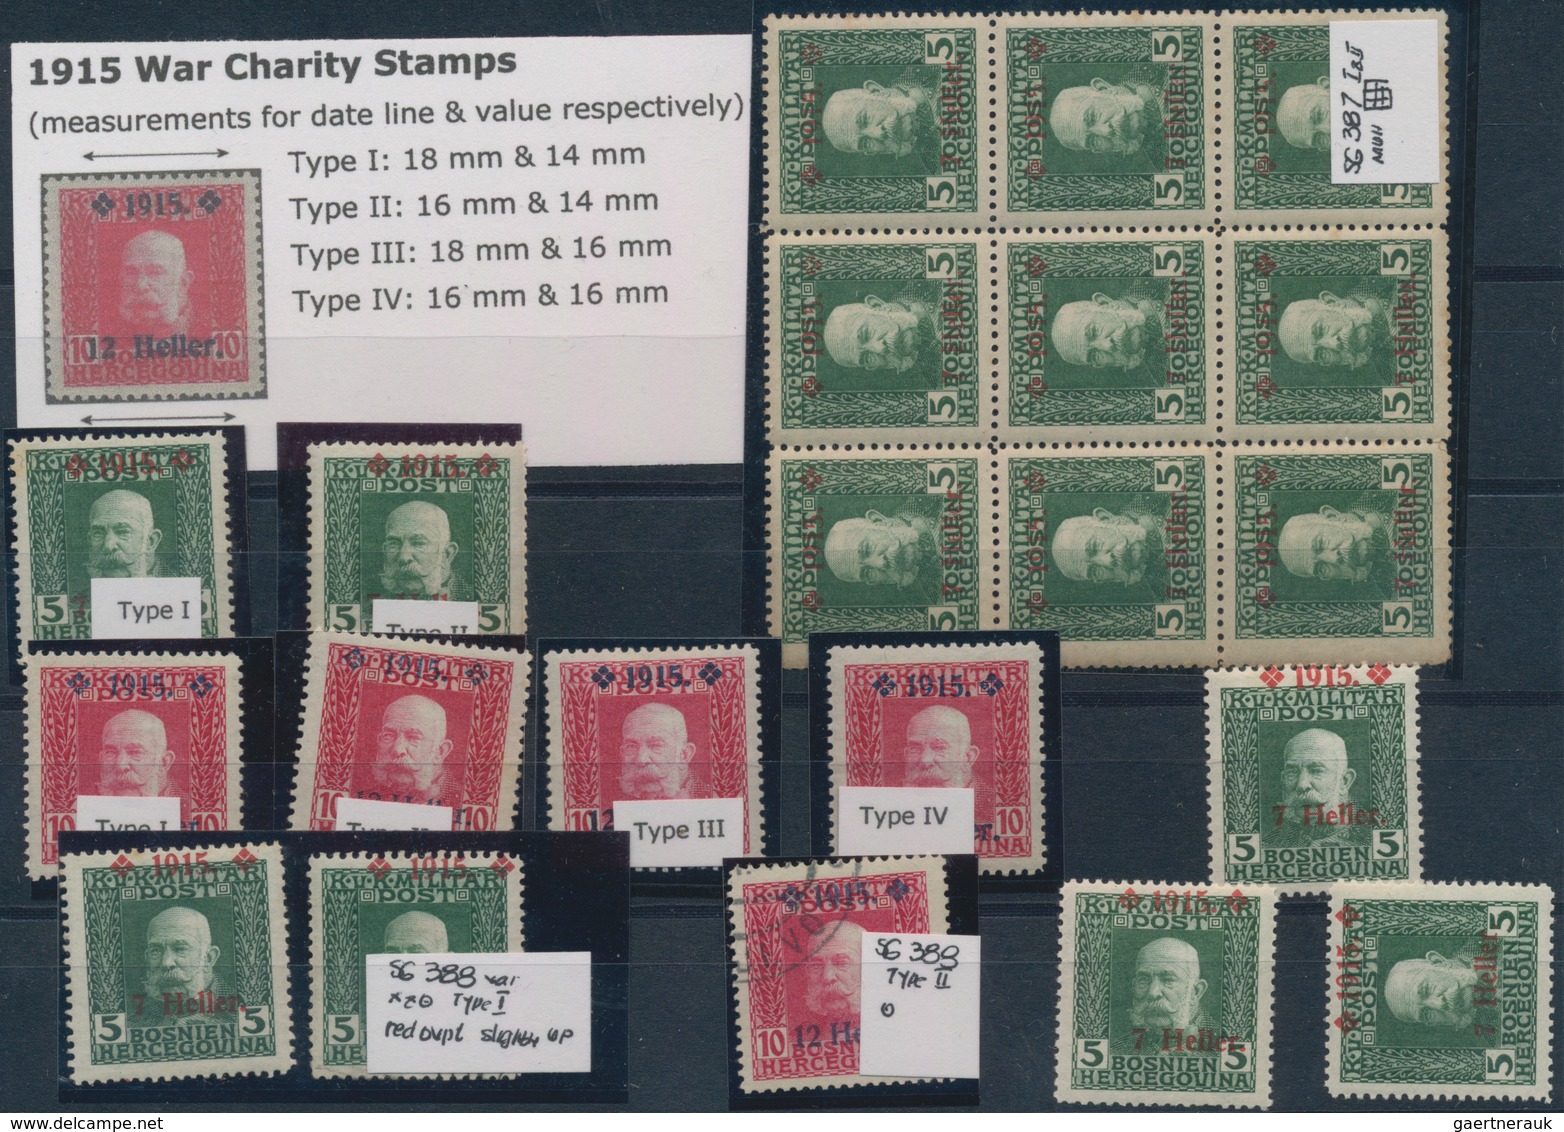 Bosnien Und Herzegowina (Österreich 1879/1918): 1914 -1915, Small Lot Of The Overprint Stamps, Inclu - Bosnia Herzegovina